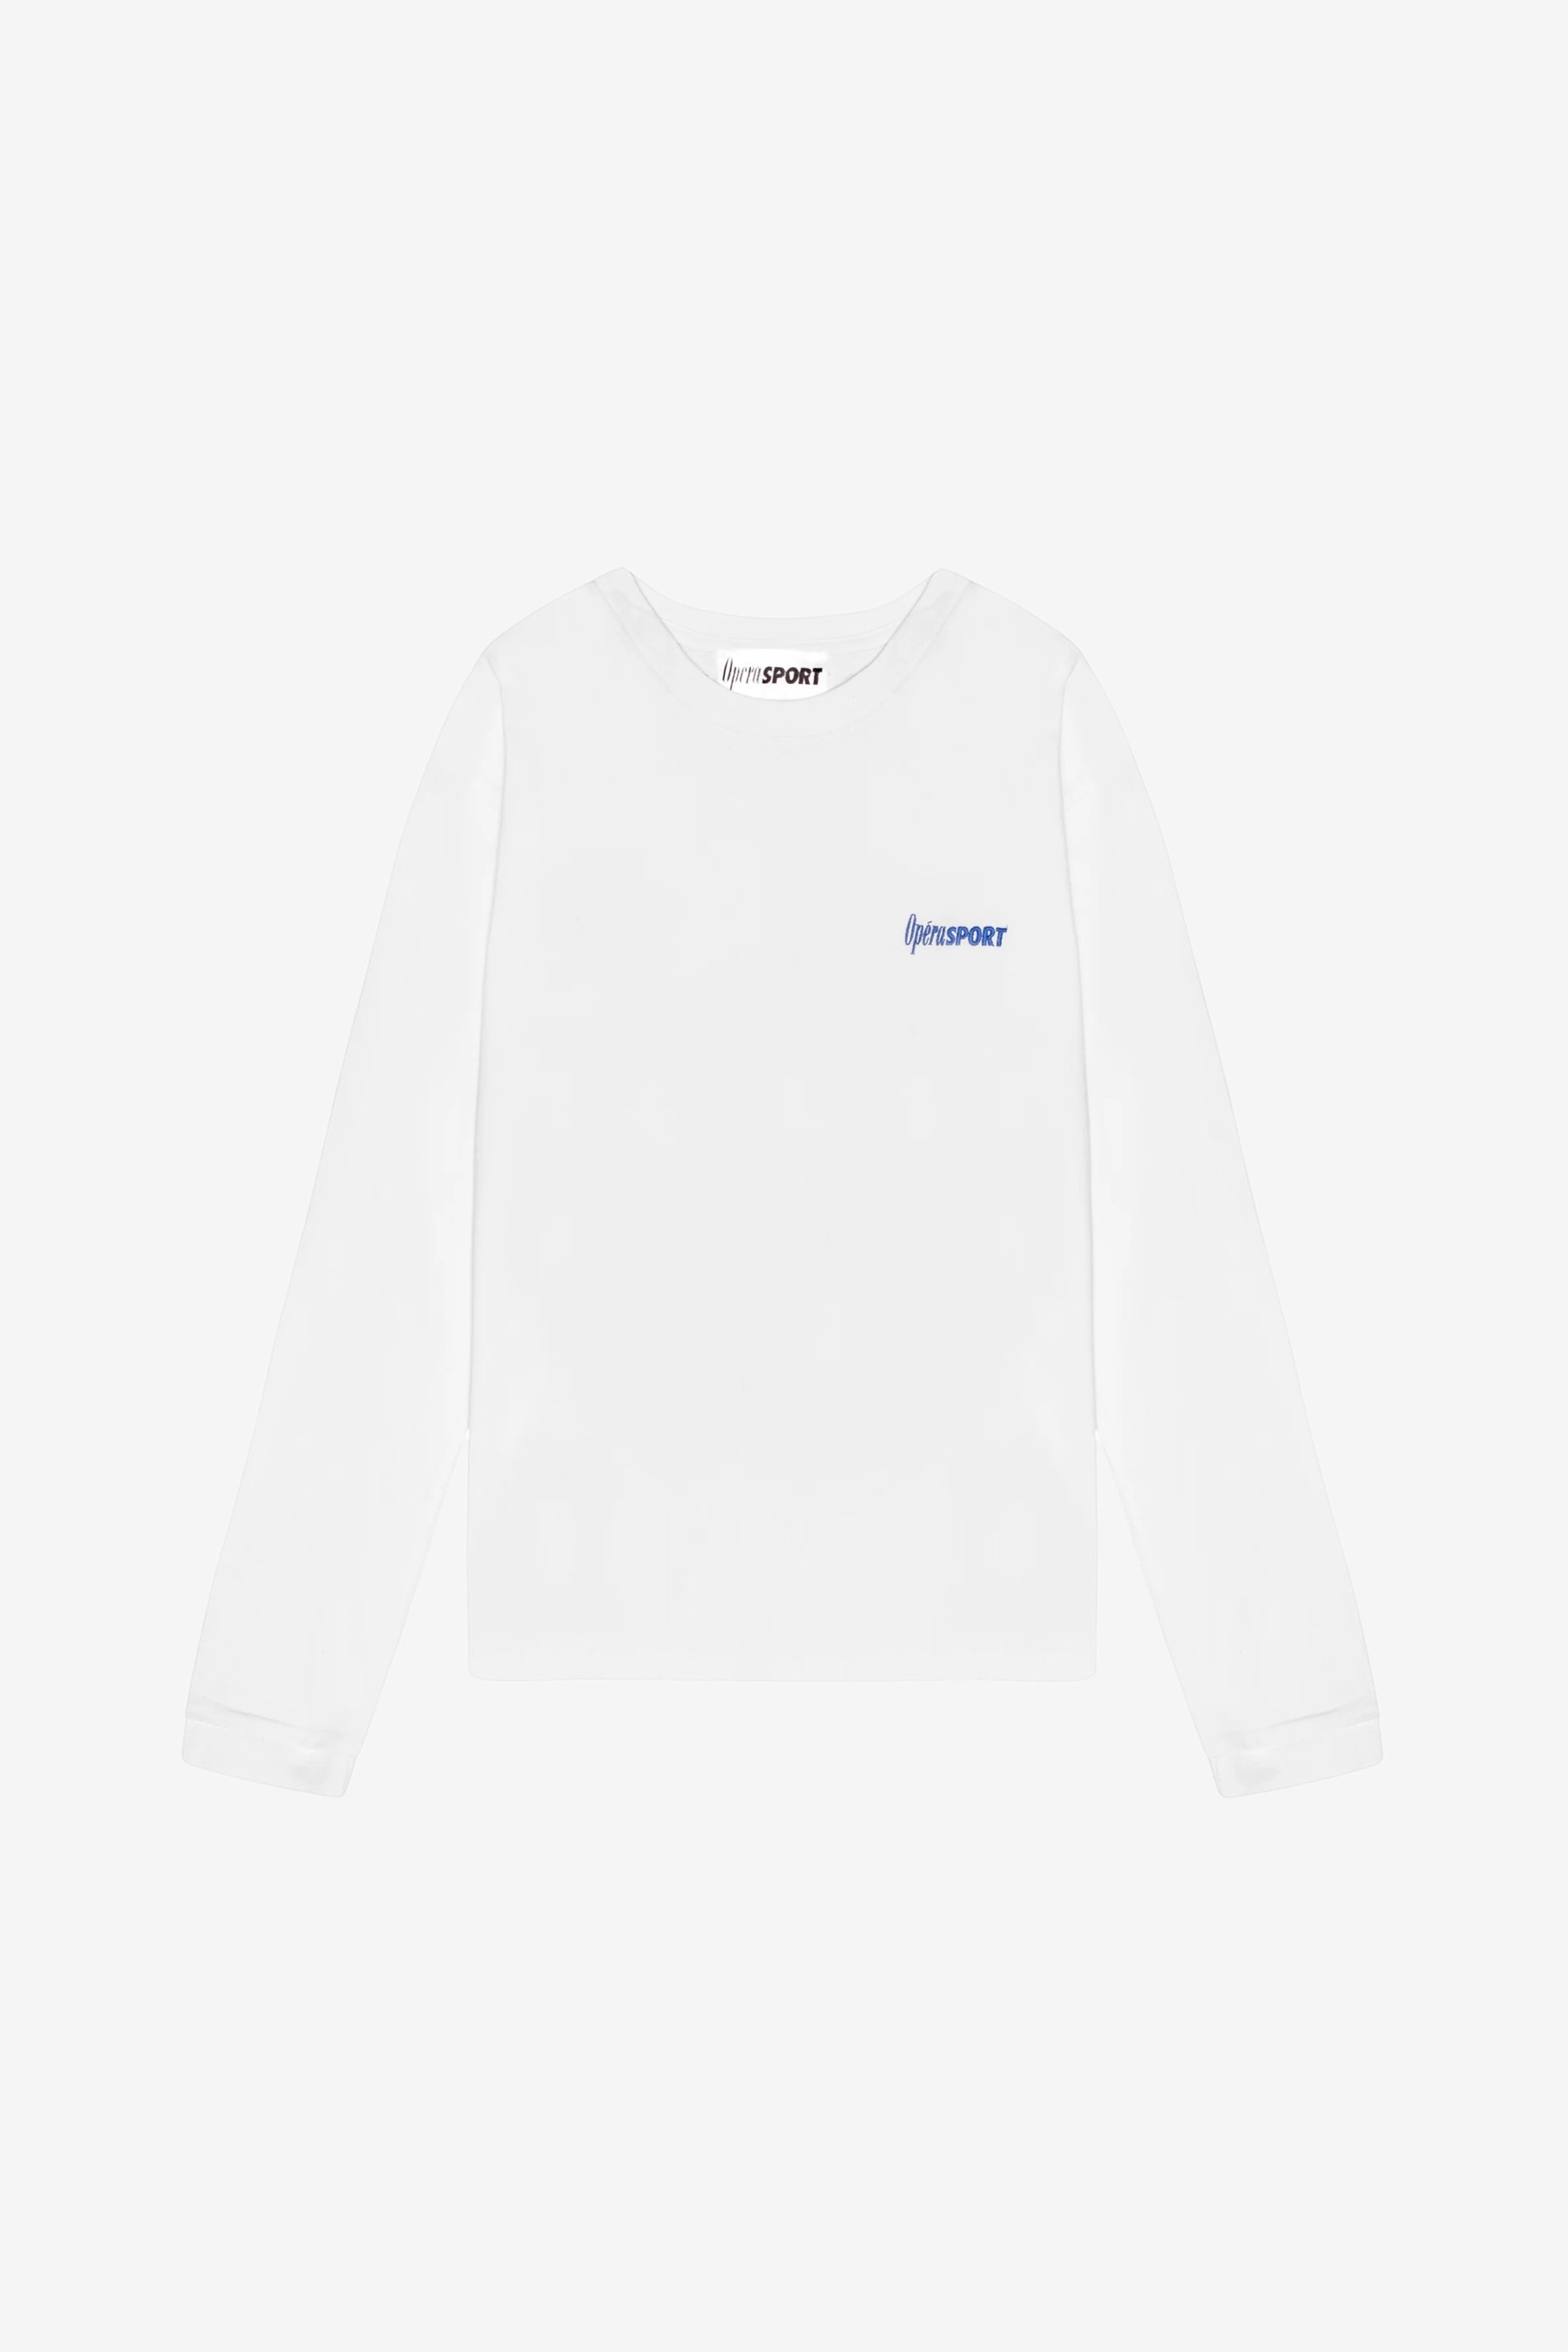 Claudette Long Sleeve T-Shirt in White - Opera Sport | Afura Store